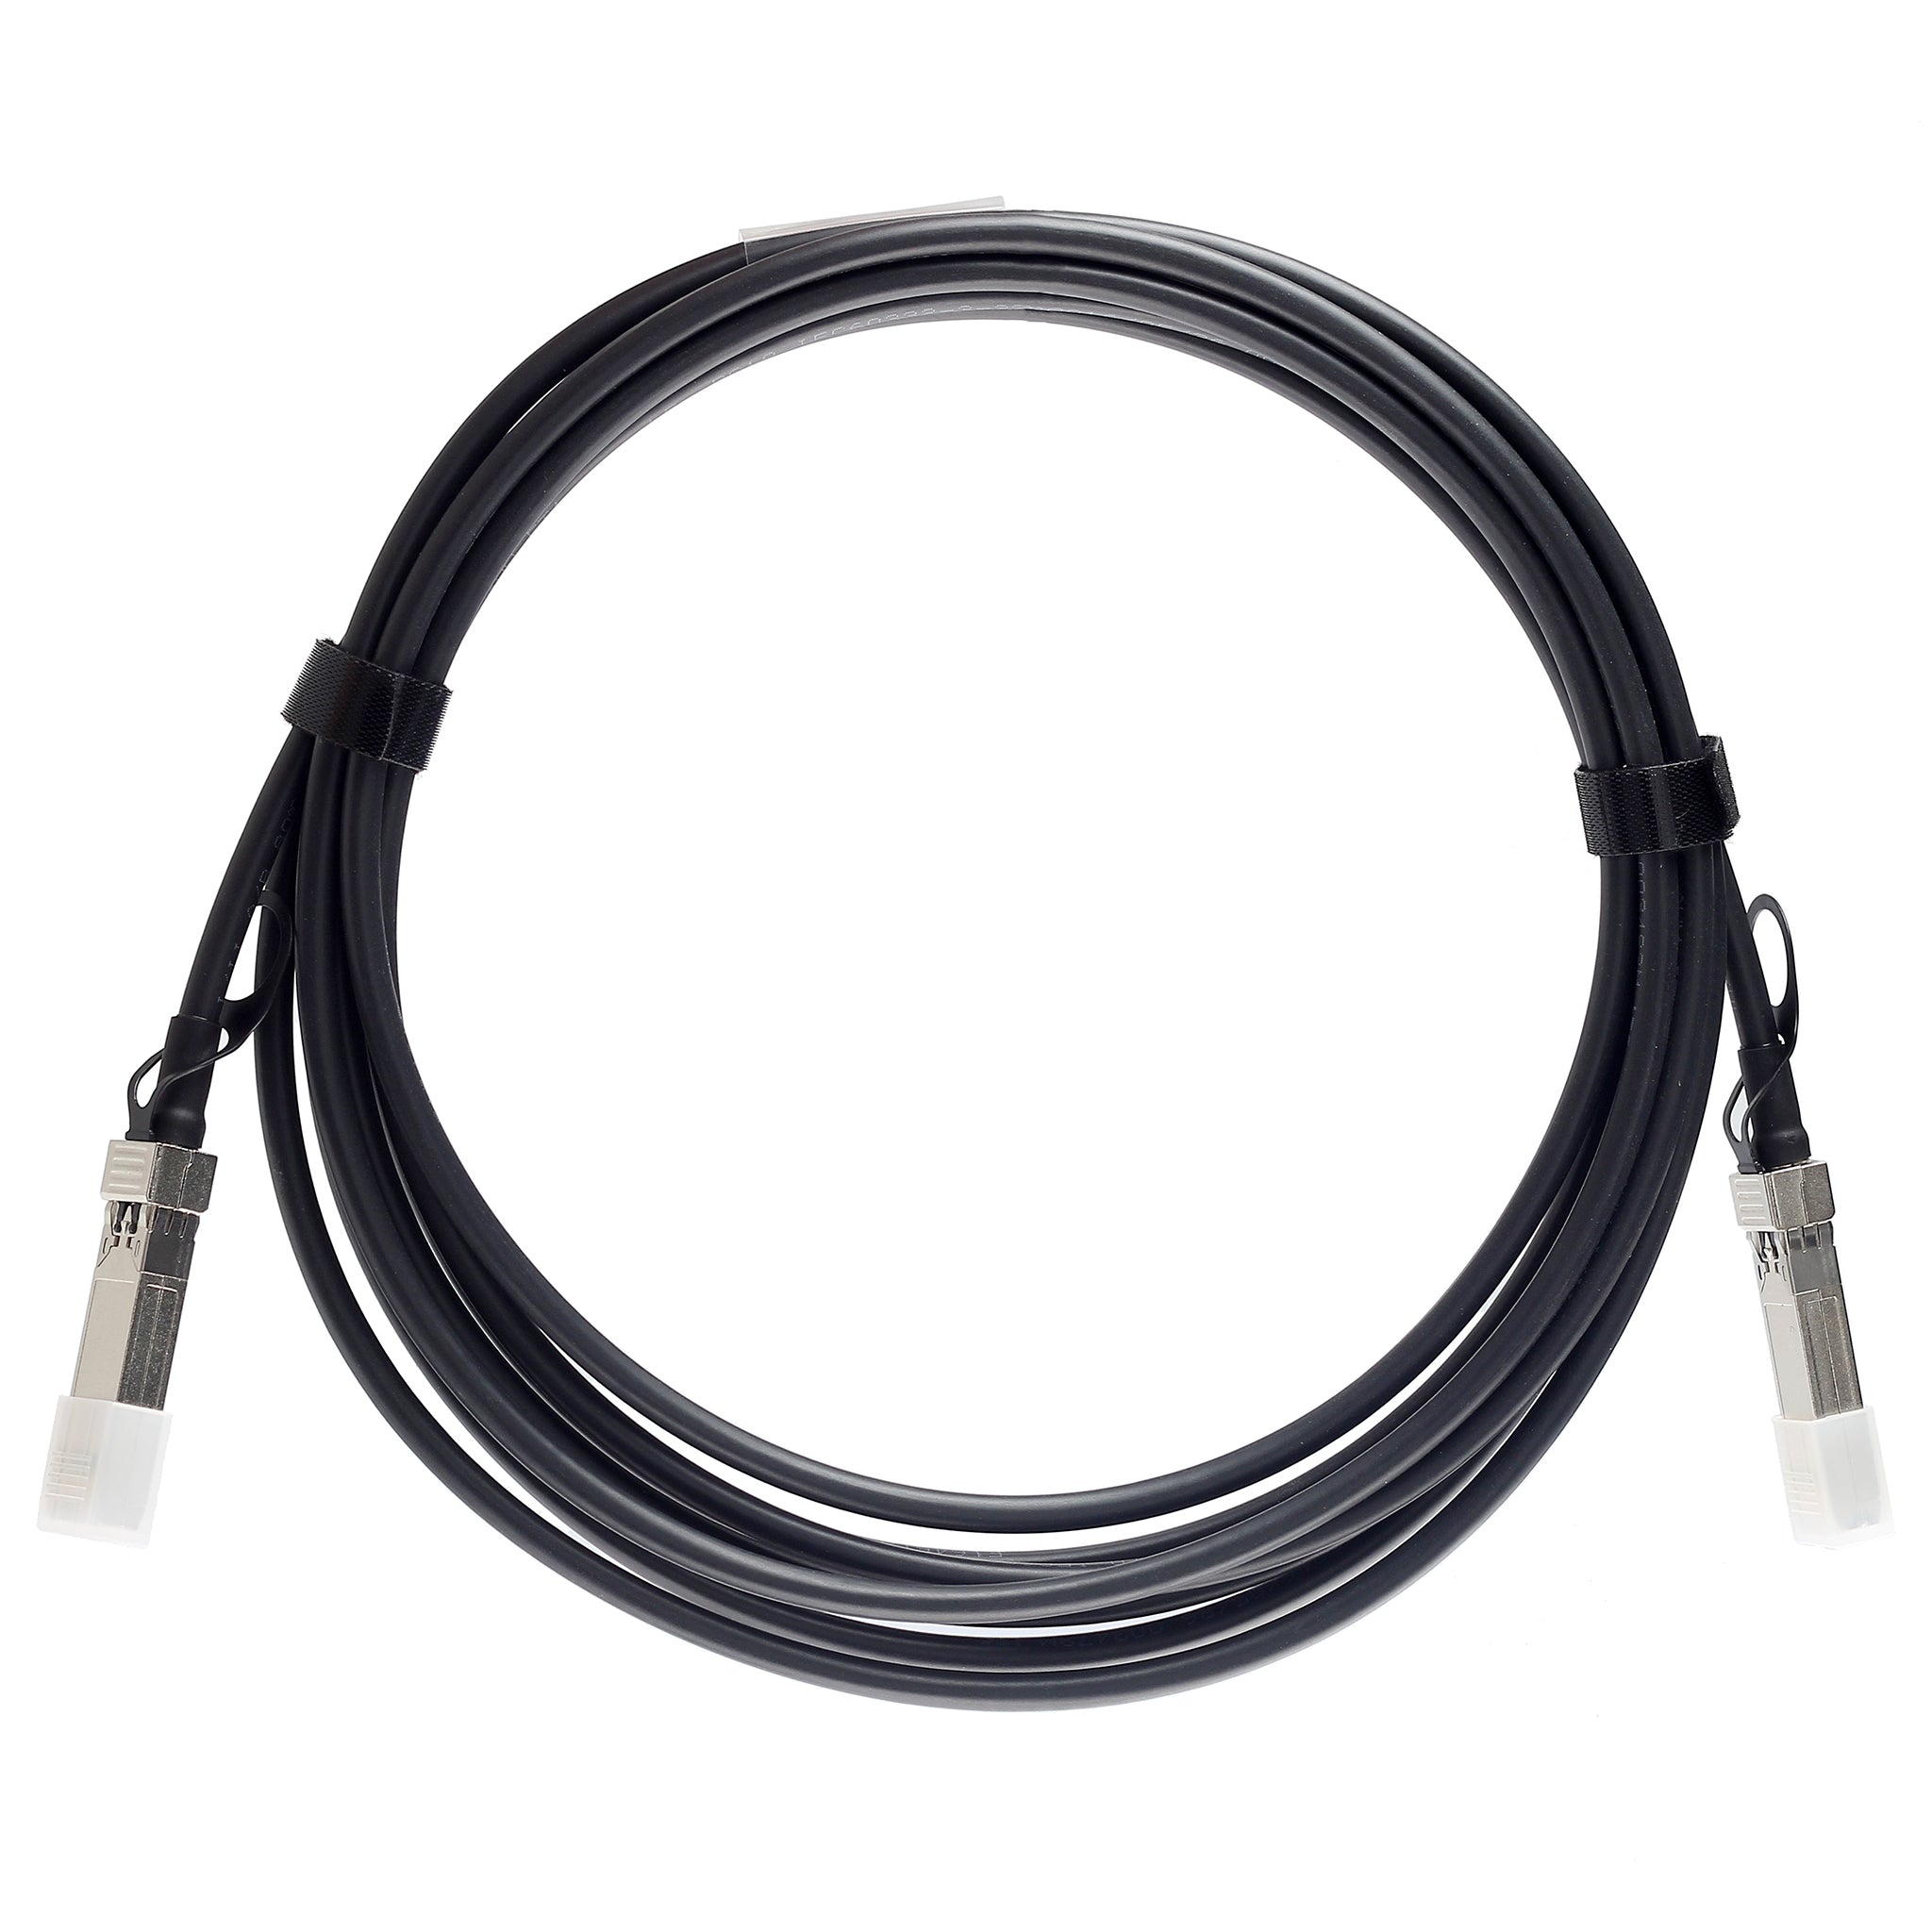 AT-QSFP3CU-C - 3m Allied Telesis Compatible 40G QSFP+ Passive Direct Attach Copper Twinax Cable